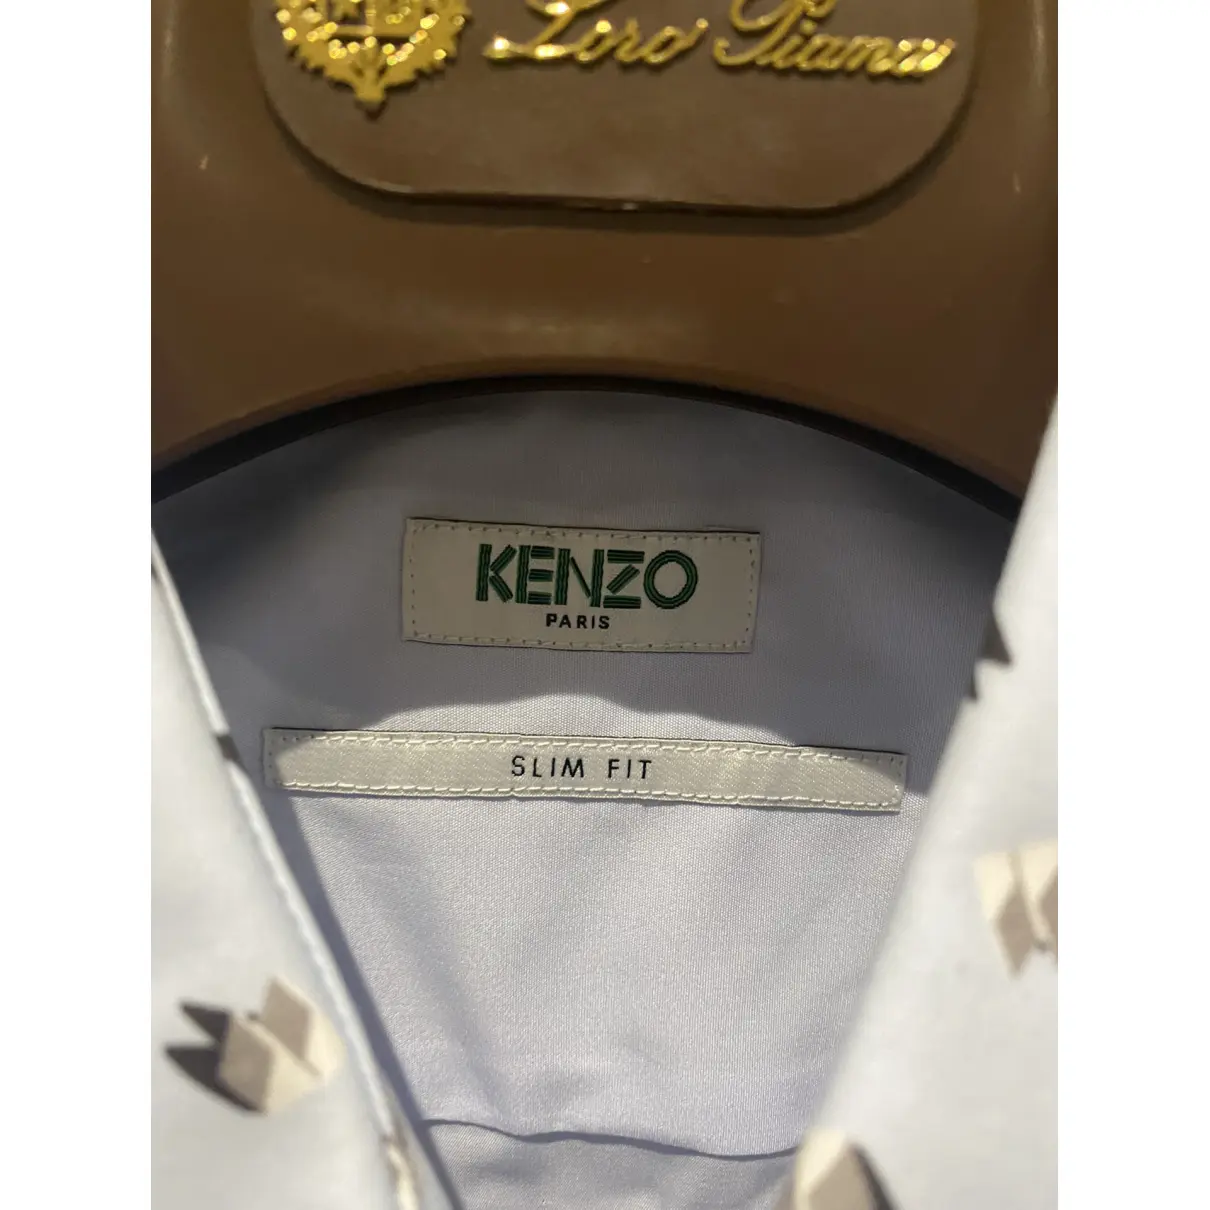 Buy Kenzo Shirt online